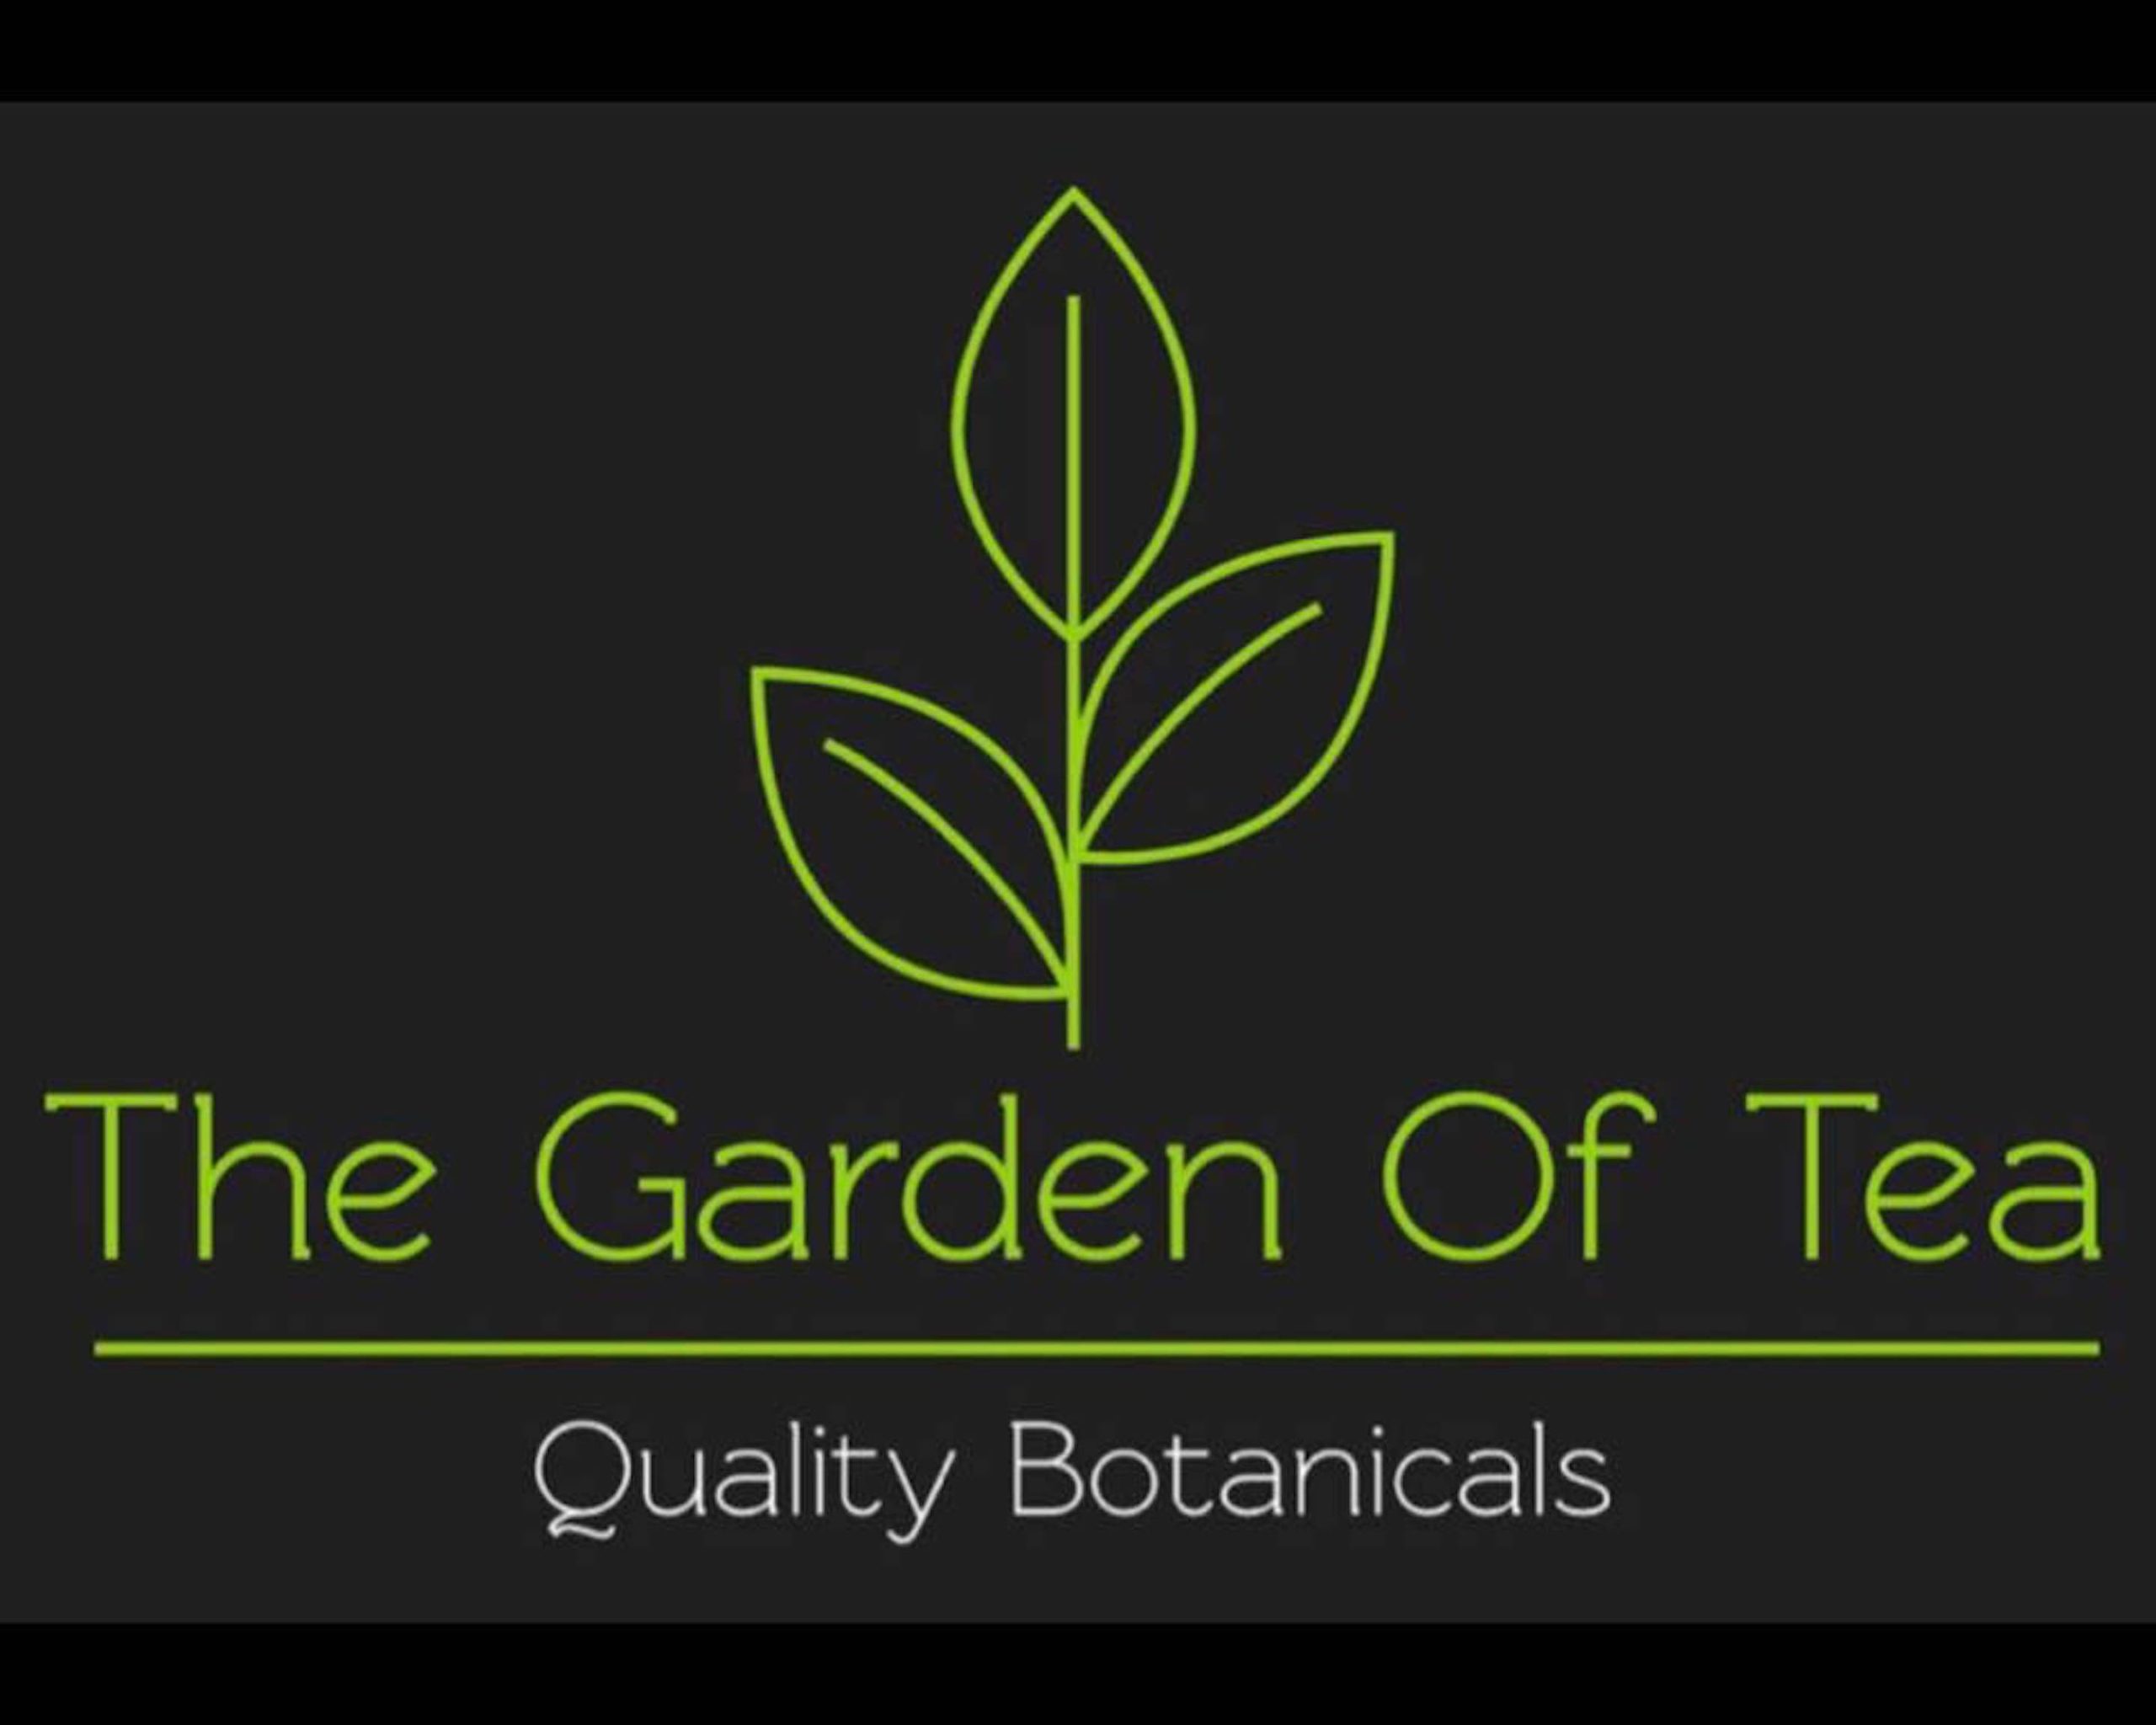 The Garden Of Tea - High Quality Botanicals